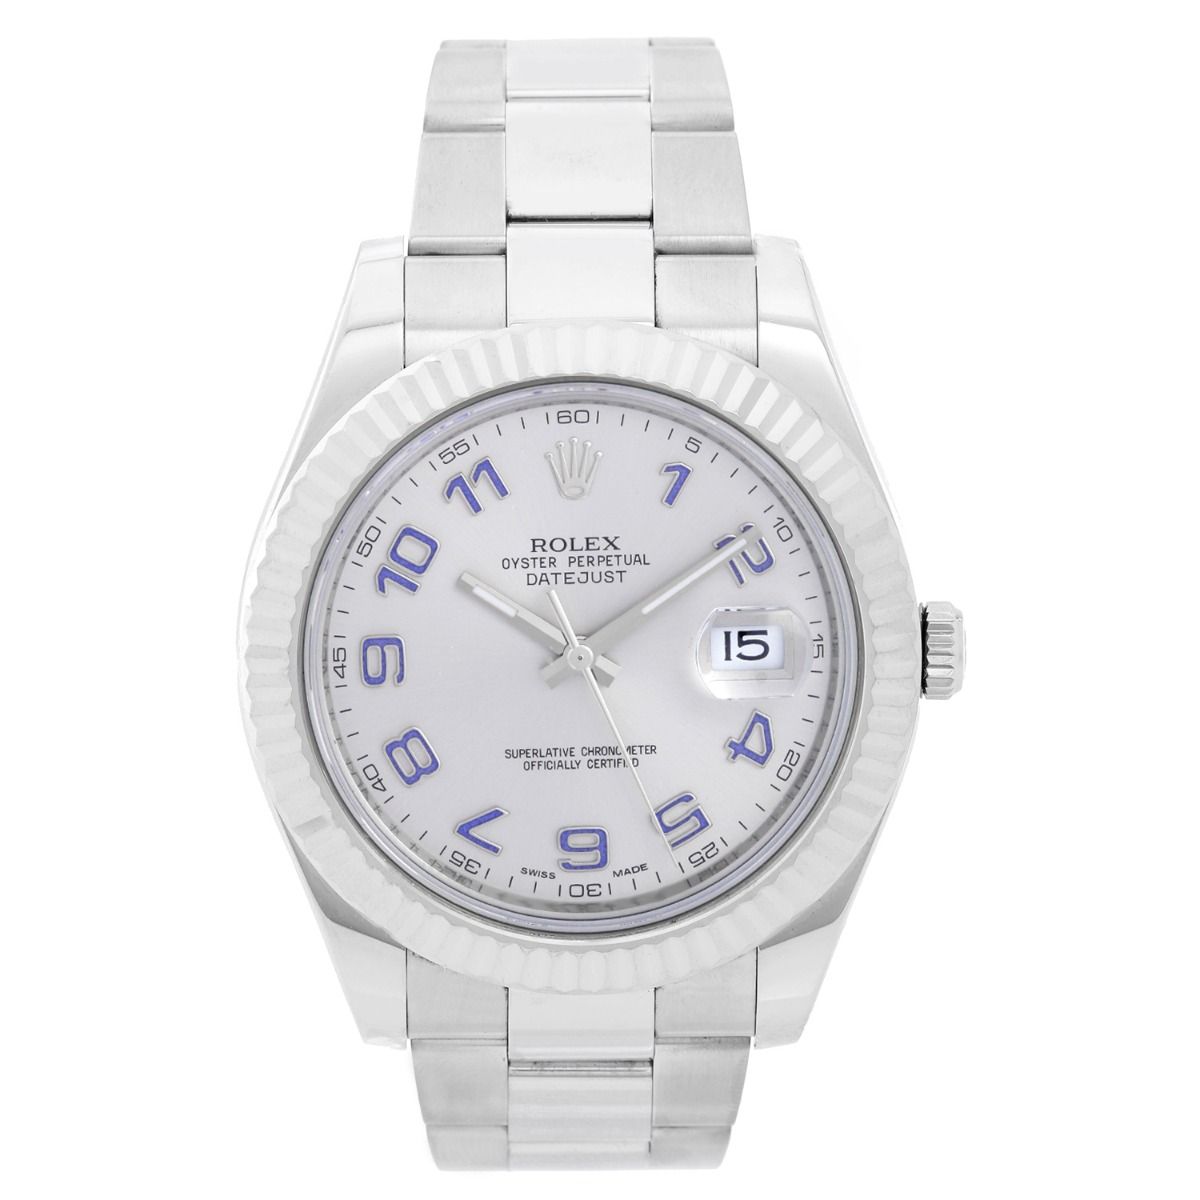 Fejde Smag Imidlertid Rolex Datejust II 41mm Watch Silver/Blue Arabic Dial 116334